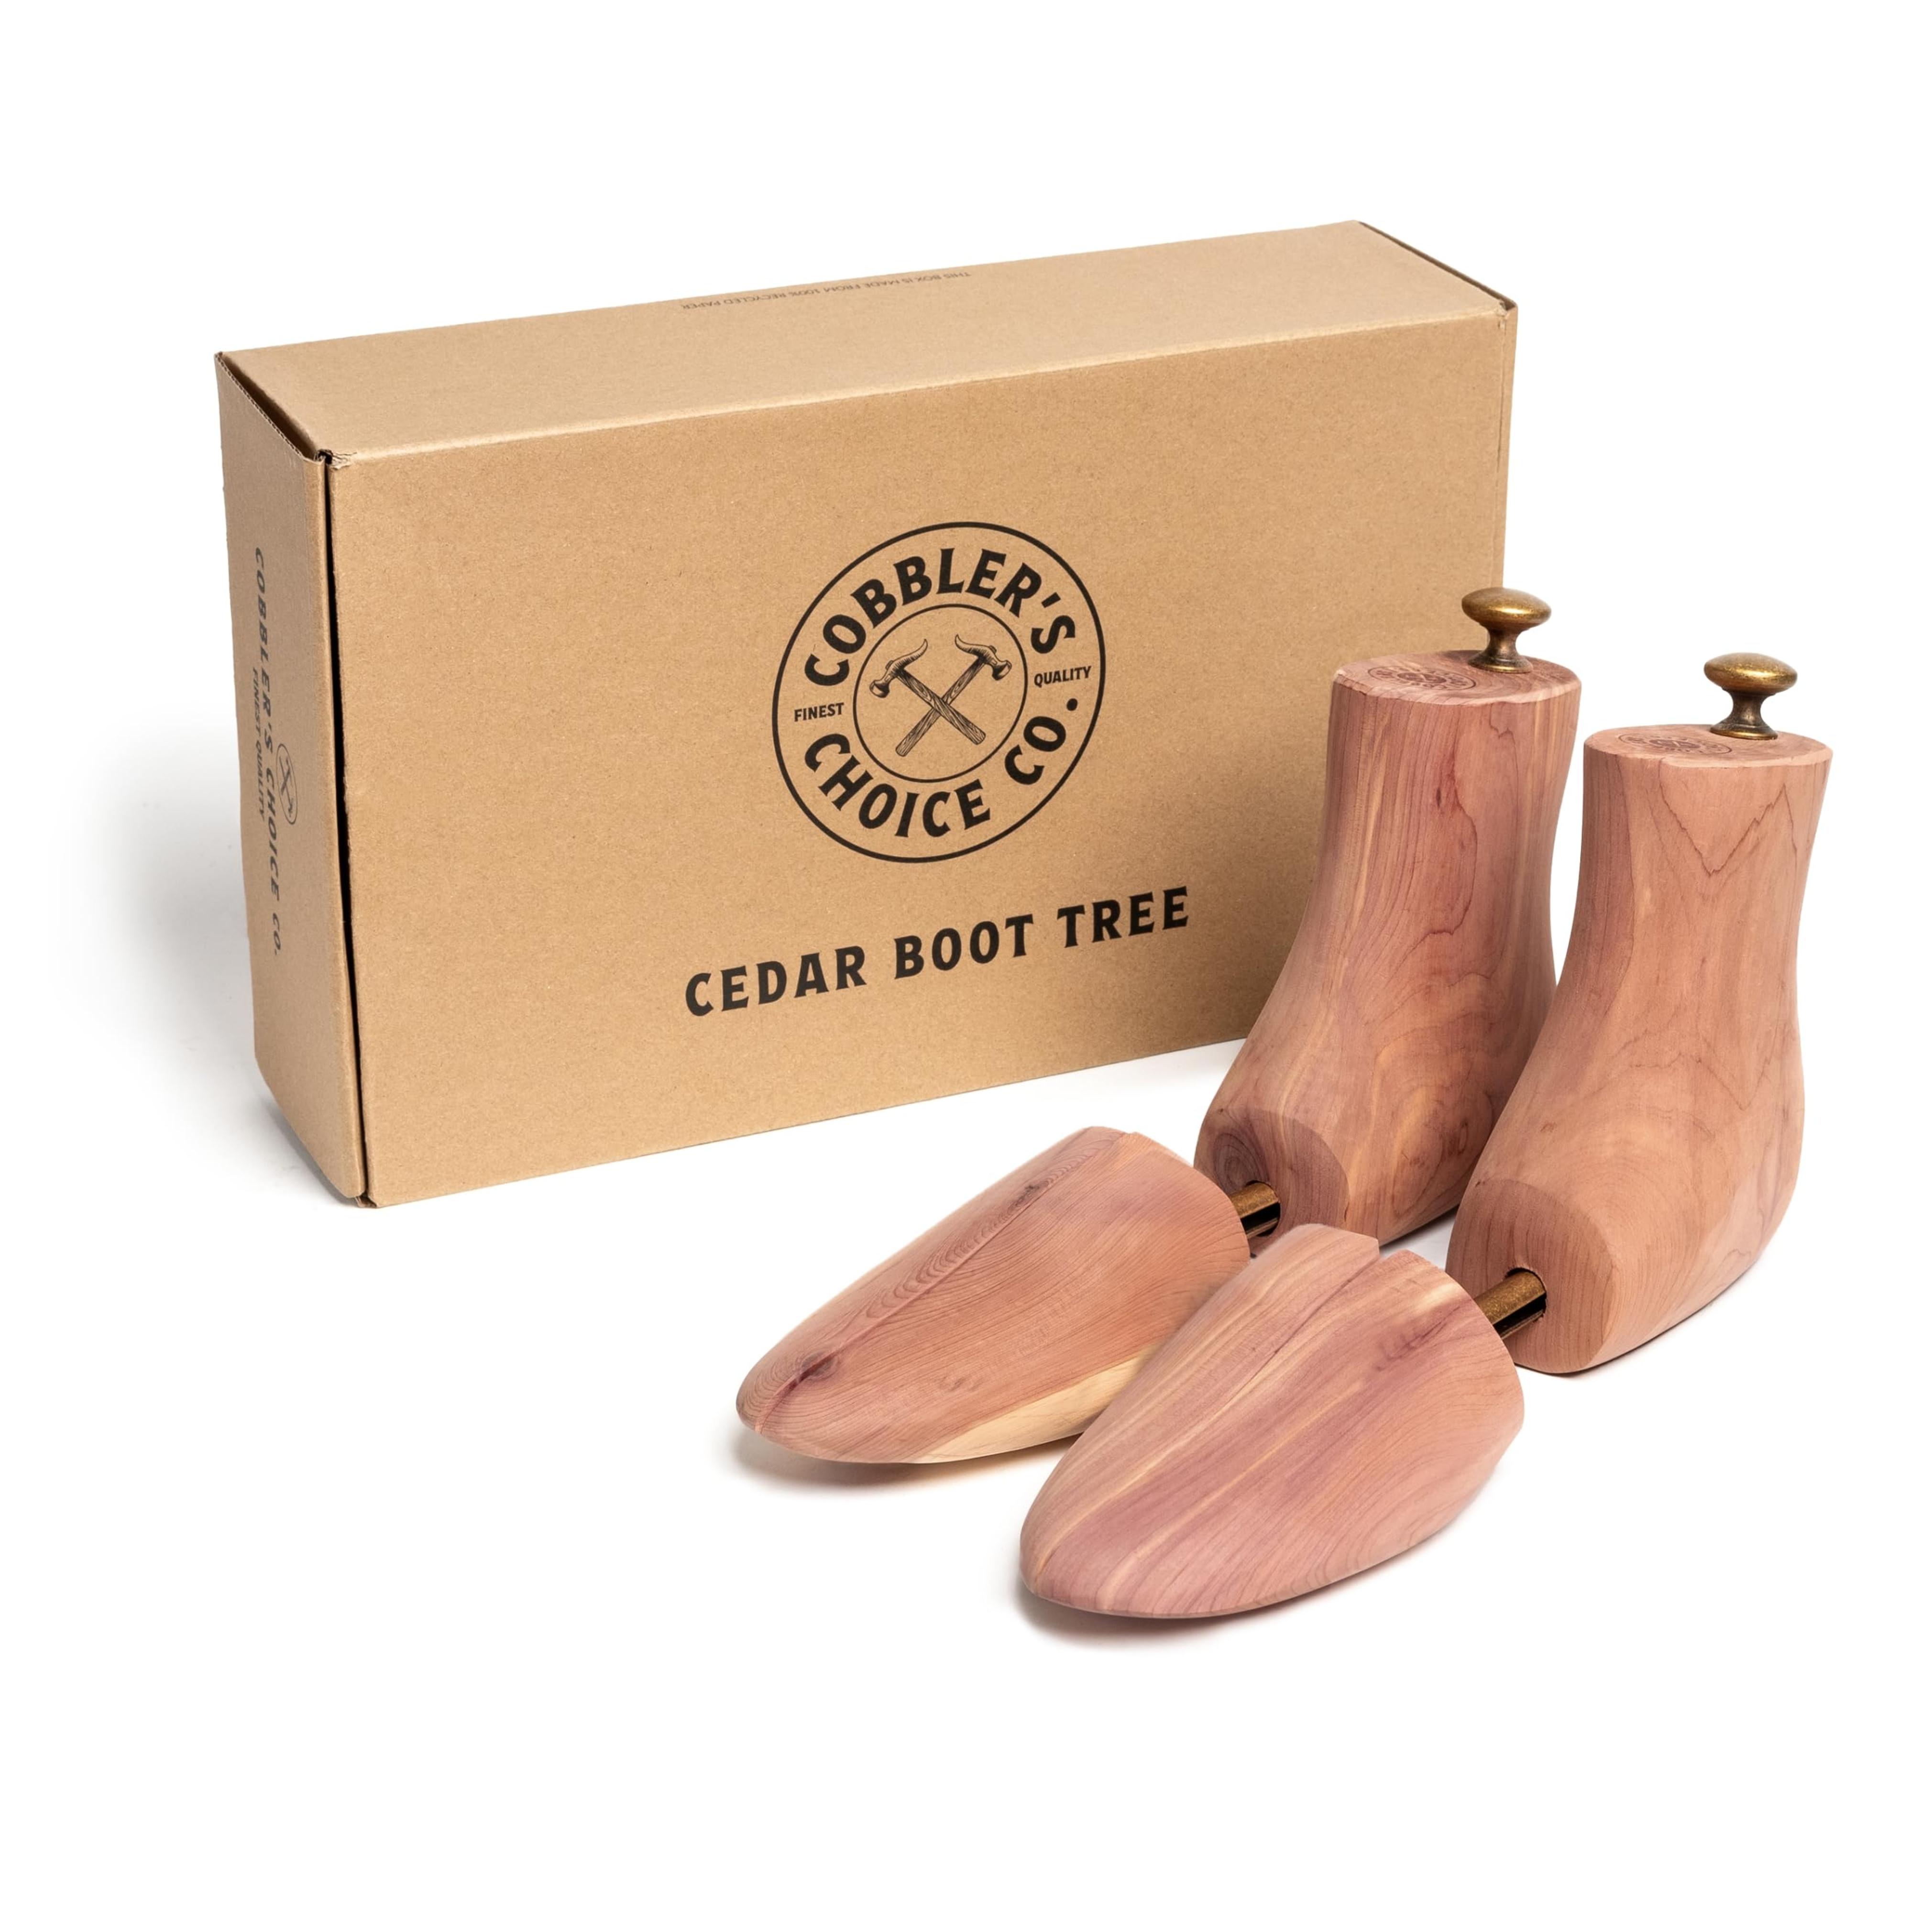 Amazon.com: Cobbler's Choice Men's Cedar Boot Tree (XX-Large) : Clothing, Shoes & Jewelry